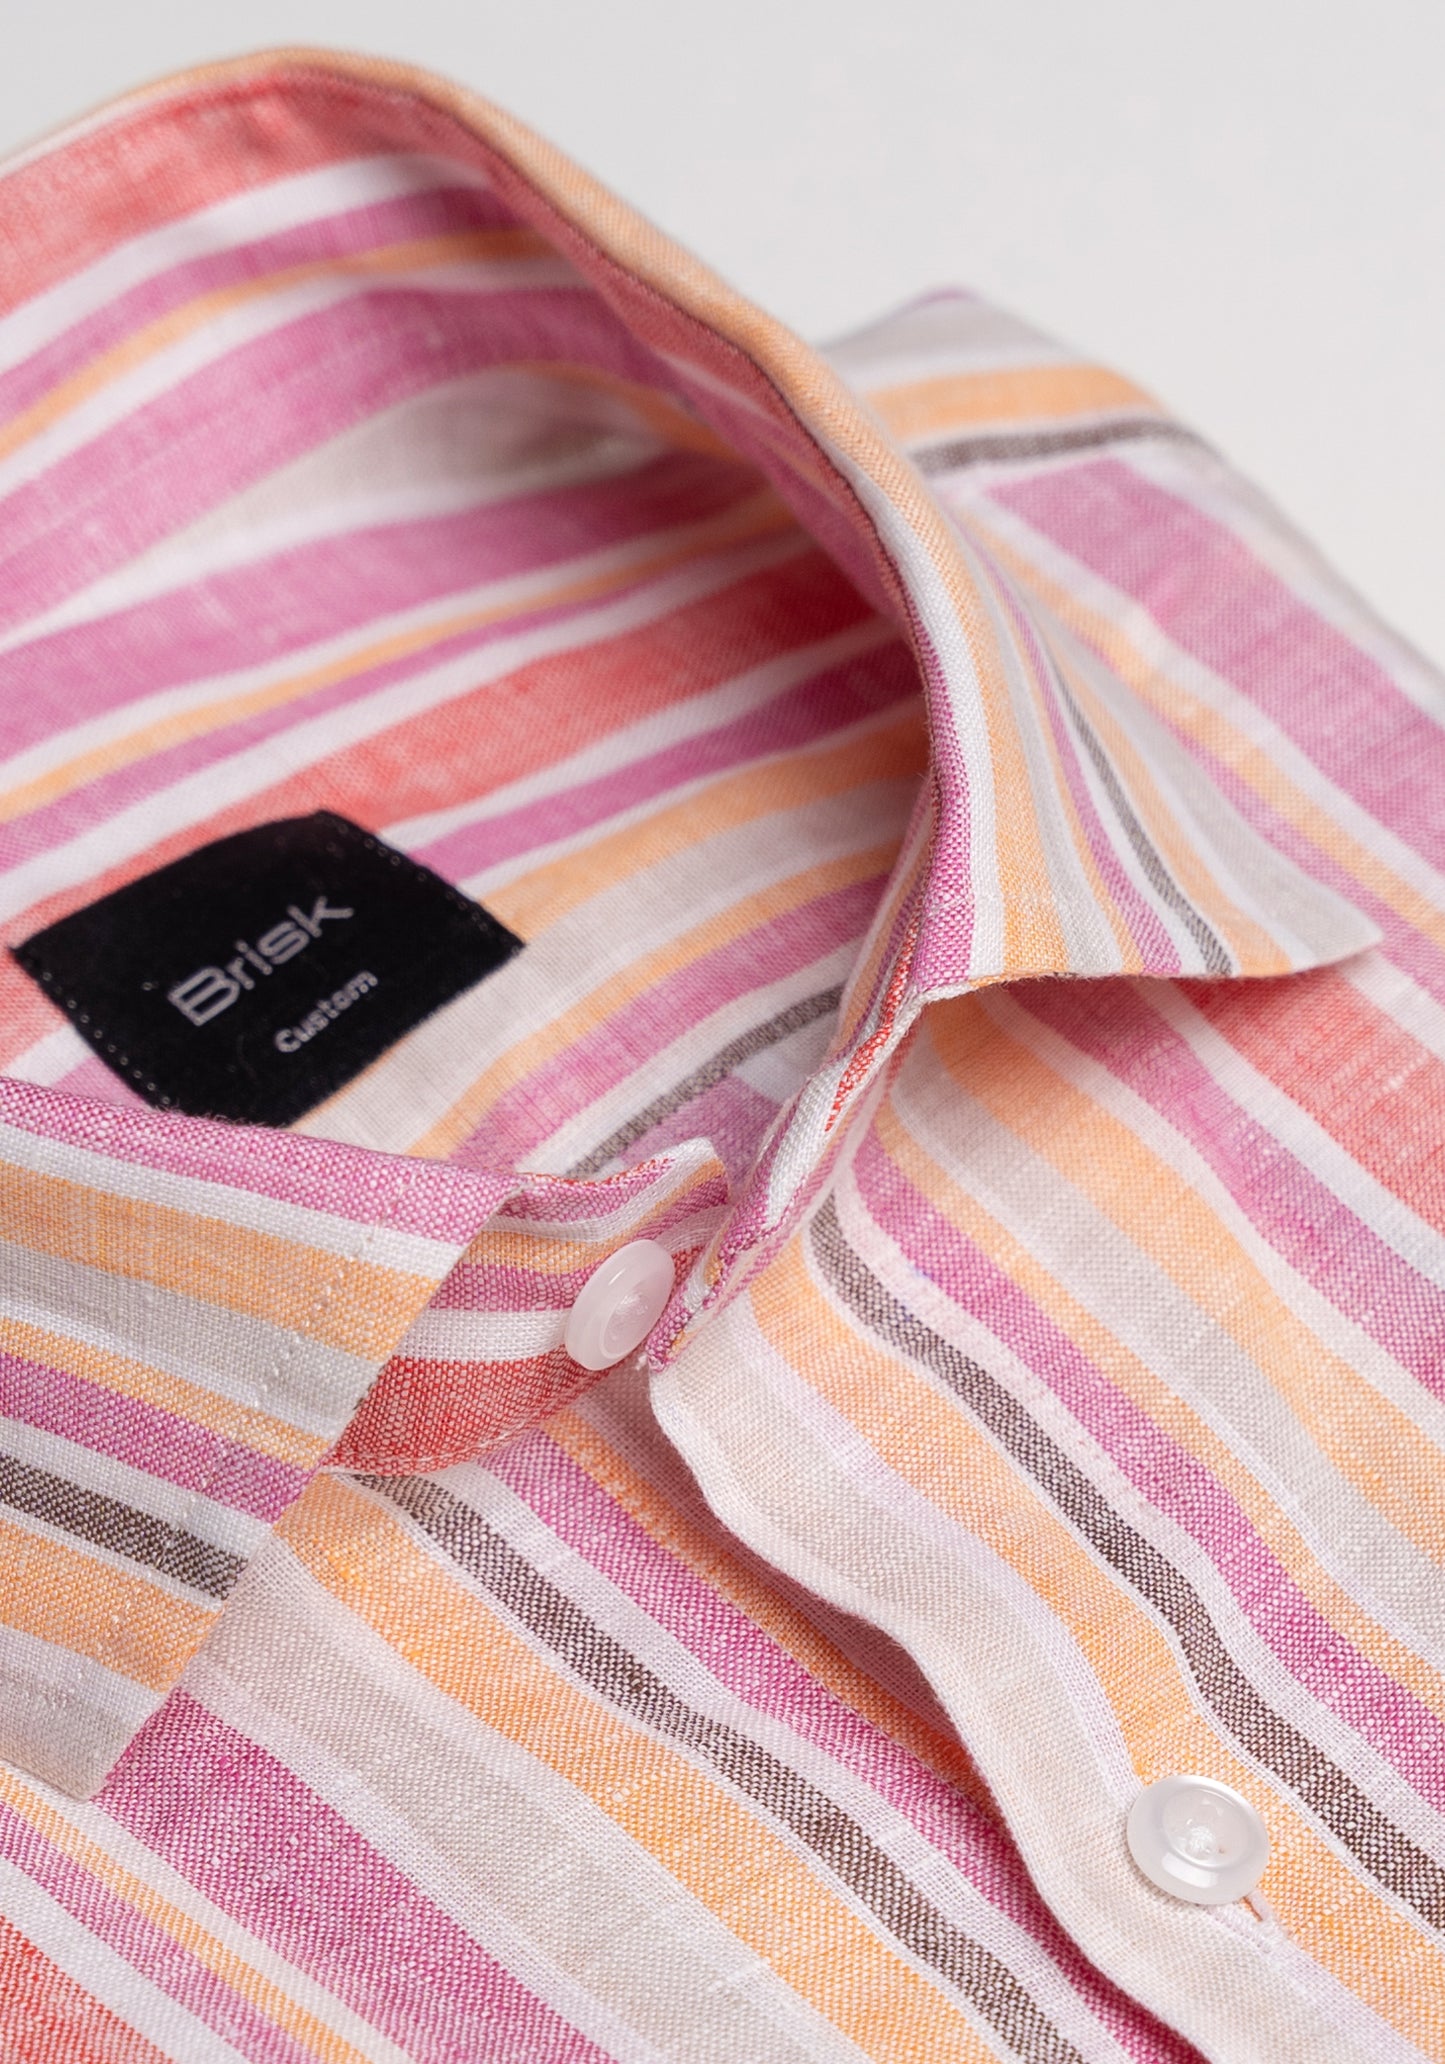 Multi Stripes Italian Linen Shirt - Sale